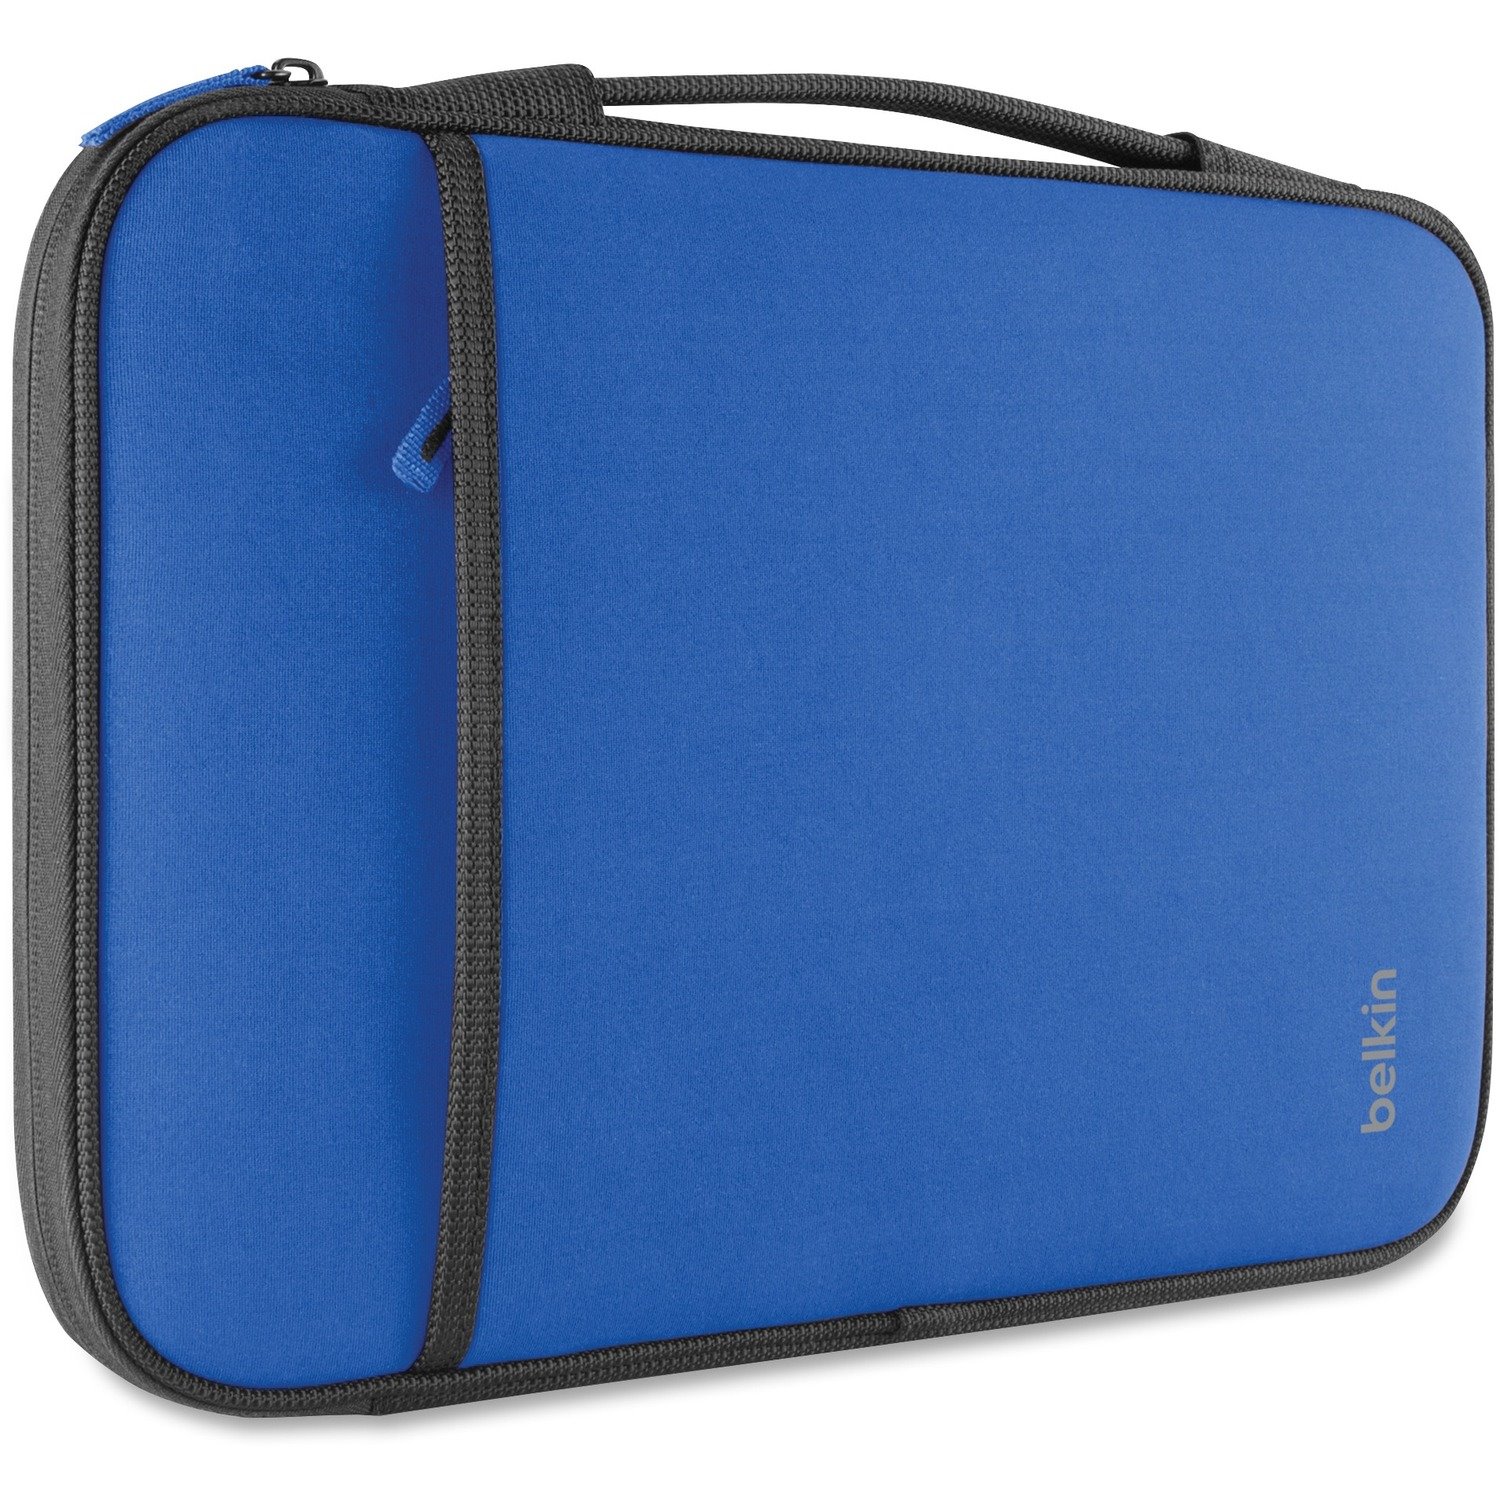 Belkin Carrying Case (Sleeve) for 11" Apple MacBook Air, Chromebook - Blue